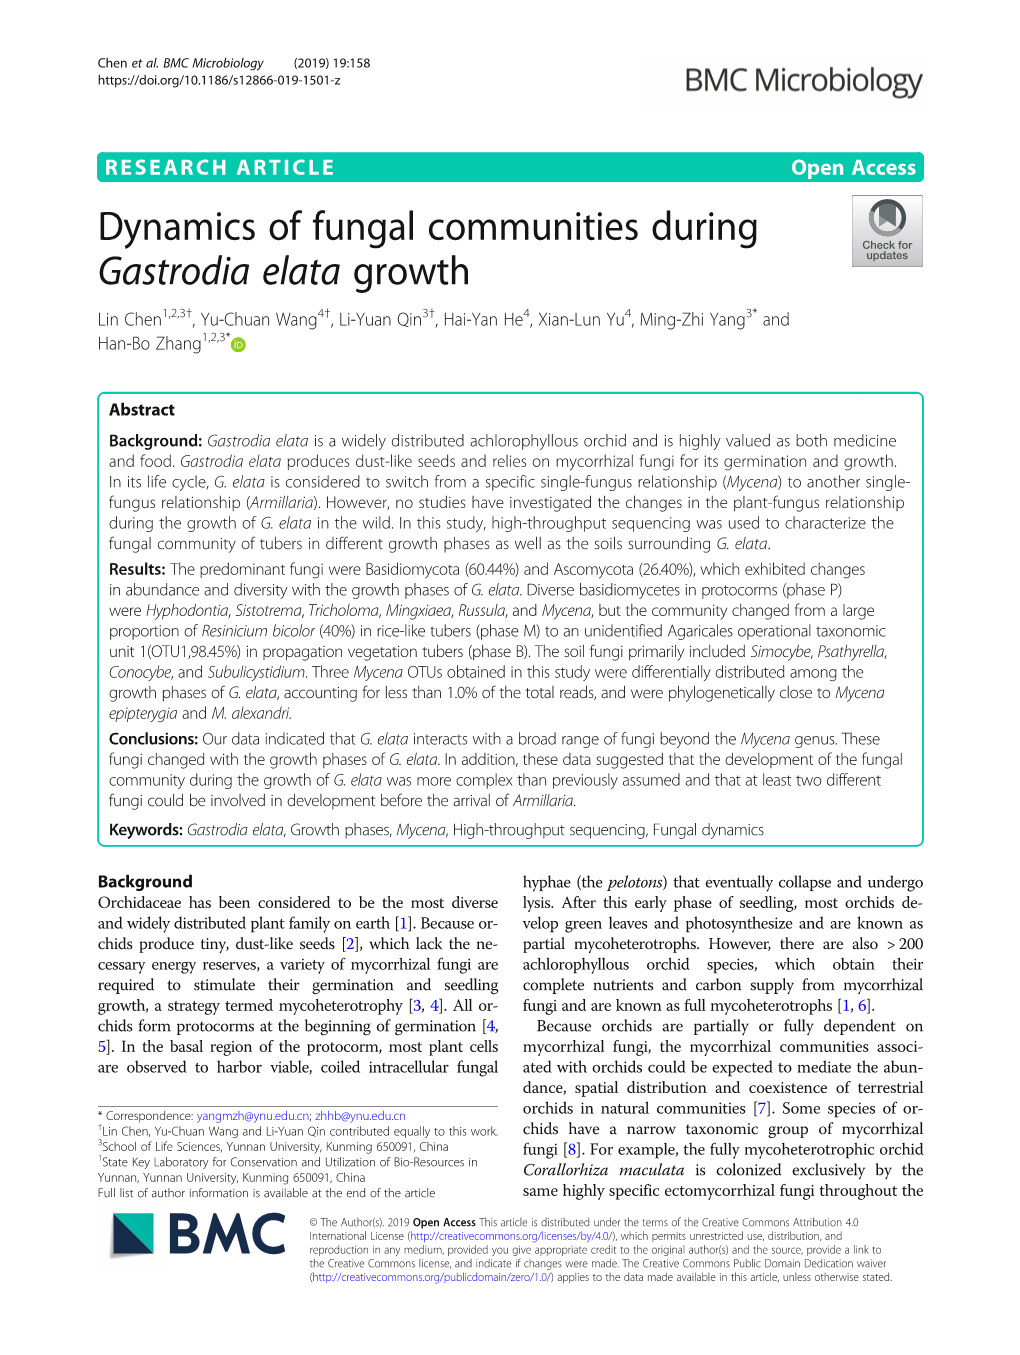 Dynamics of Fungal Communities During Gastrodia Elata Growth